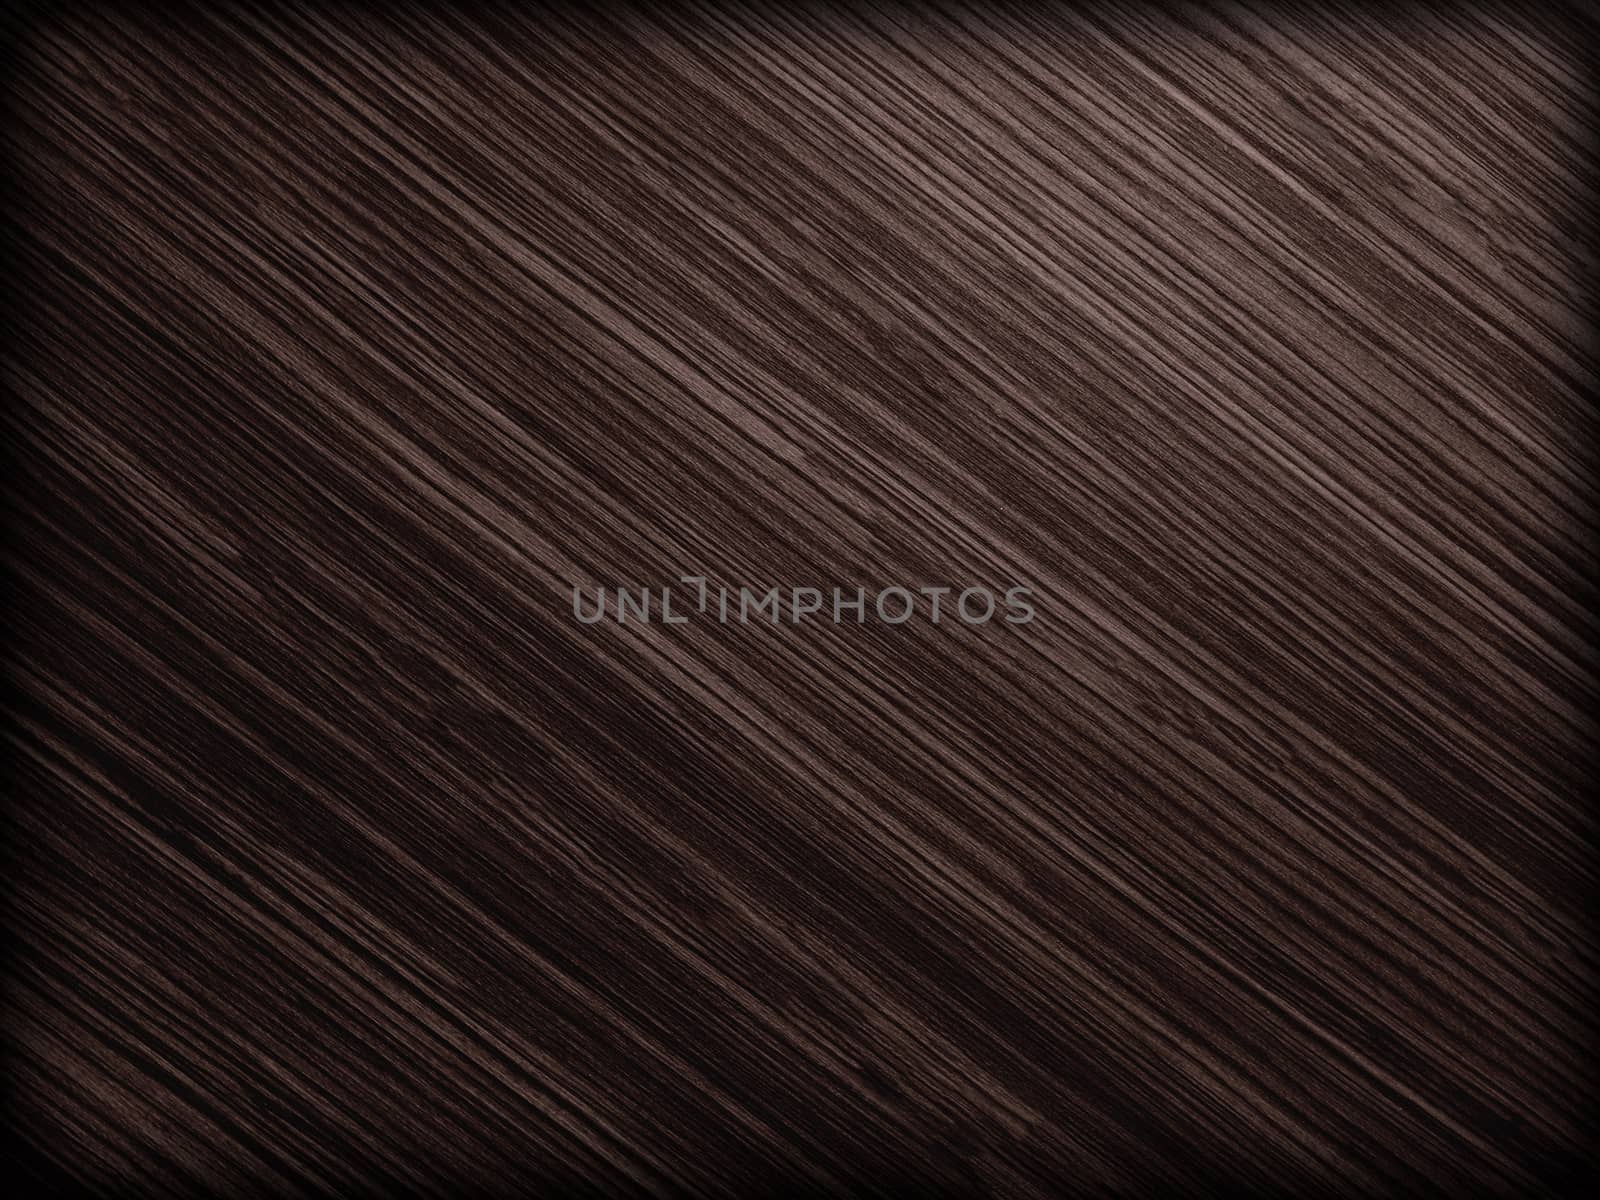 Dark brown laminate with rough surface imitation wood by Mastak80